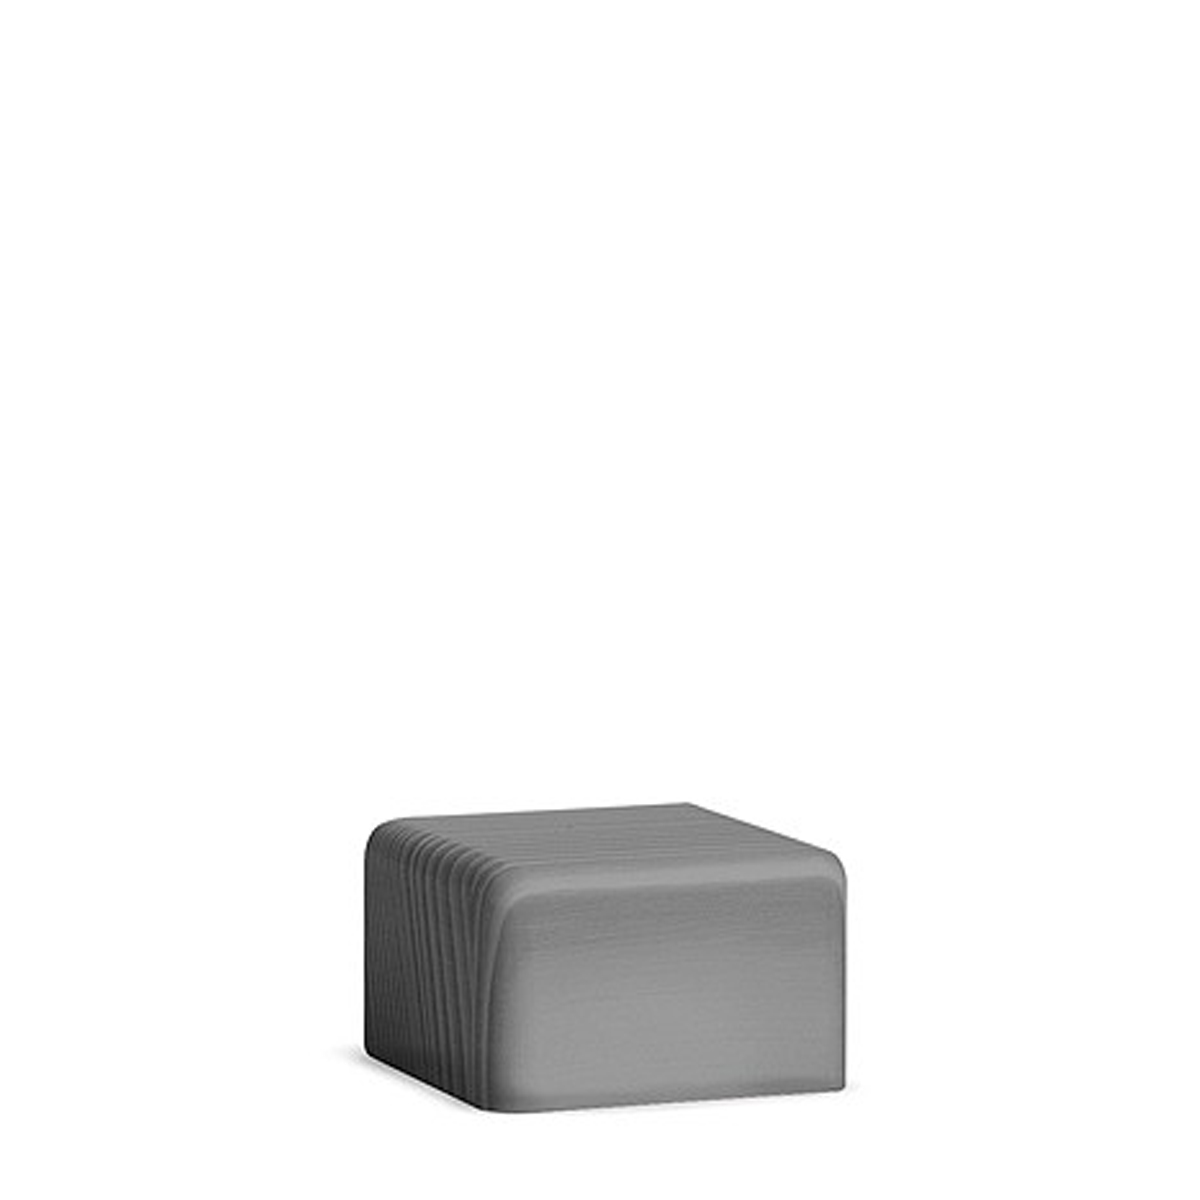 Block small, Height 4 cm, grey